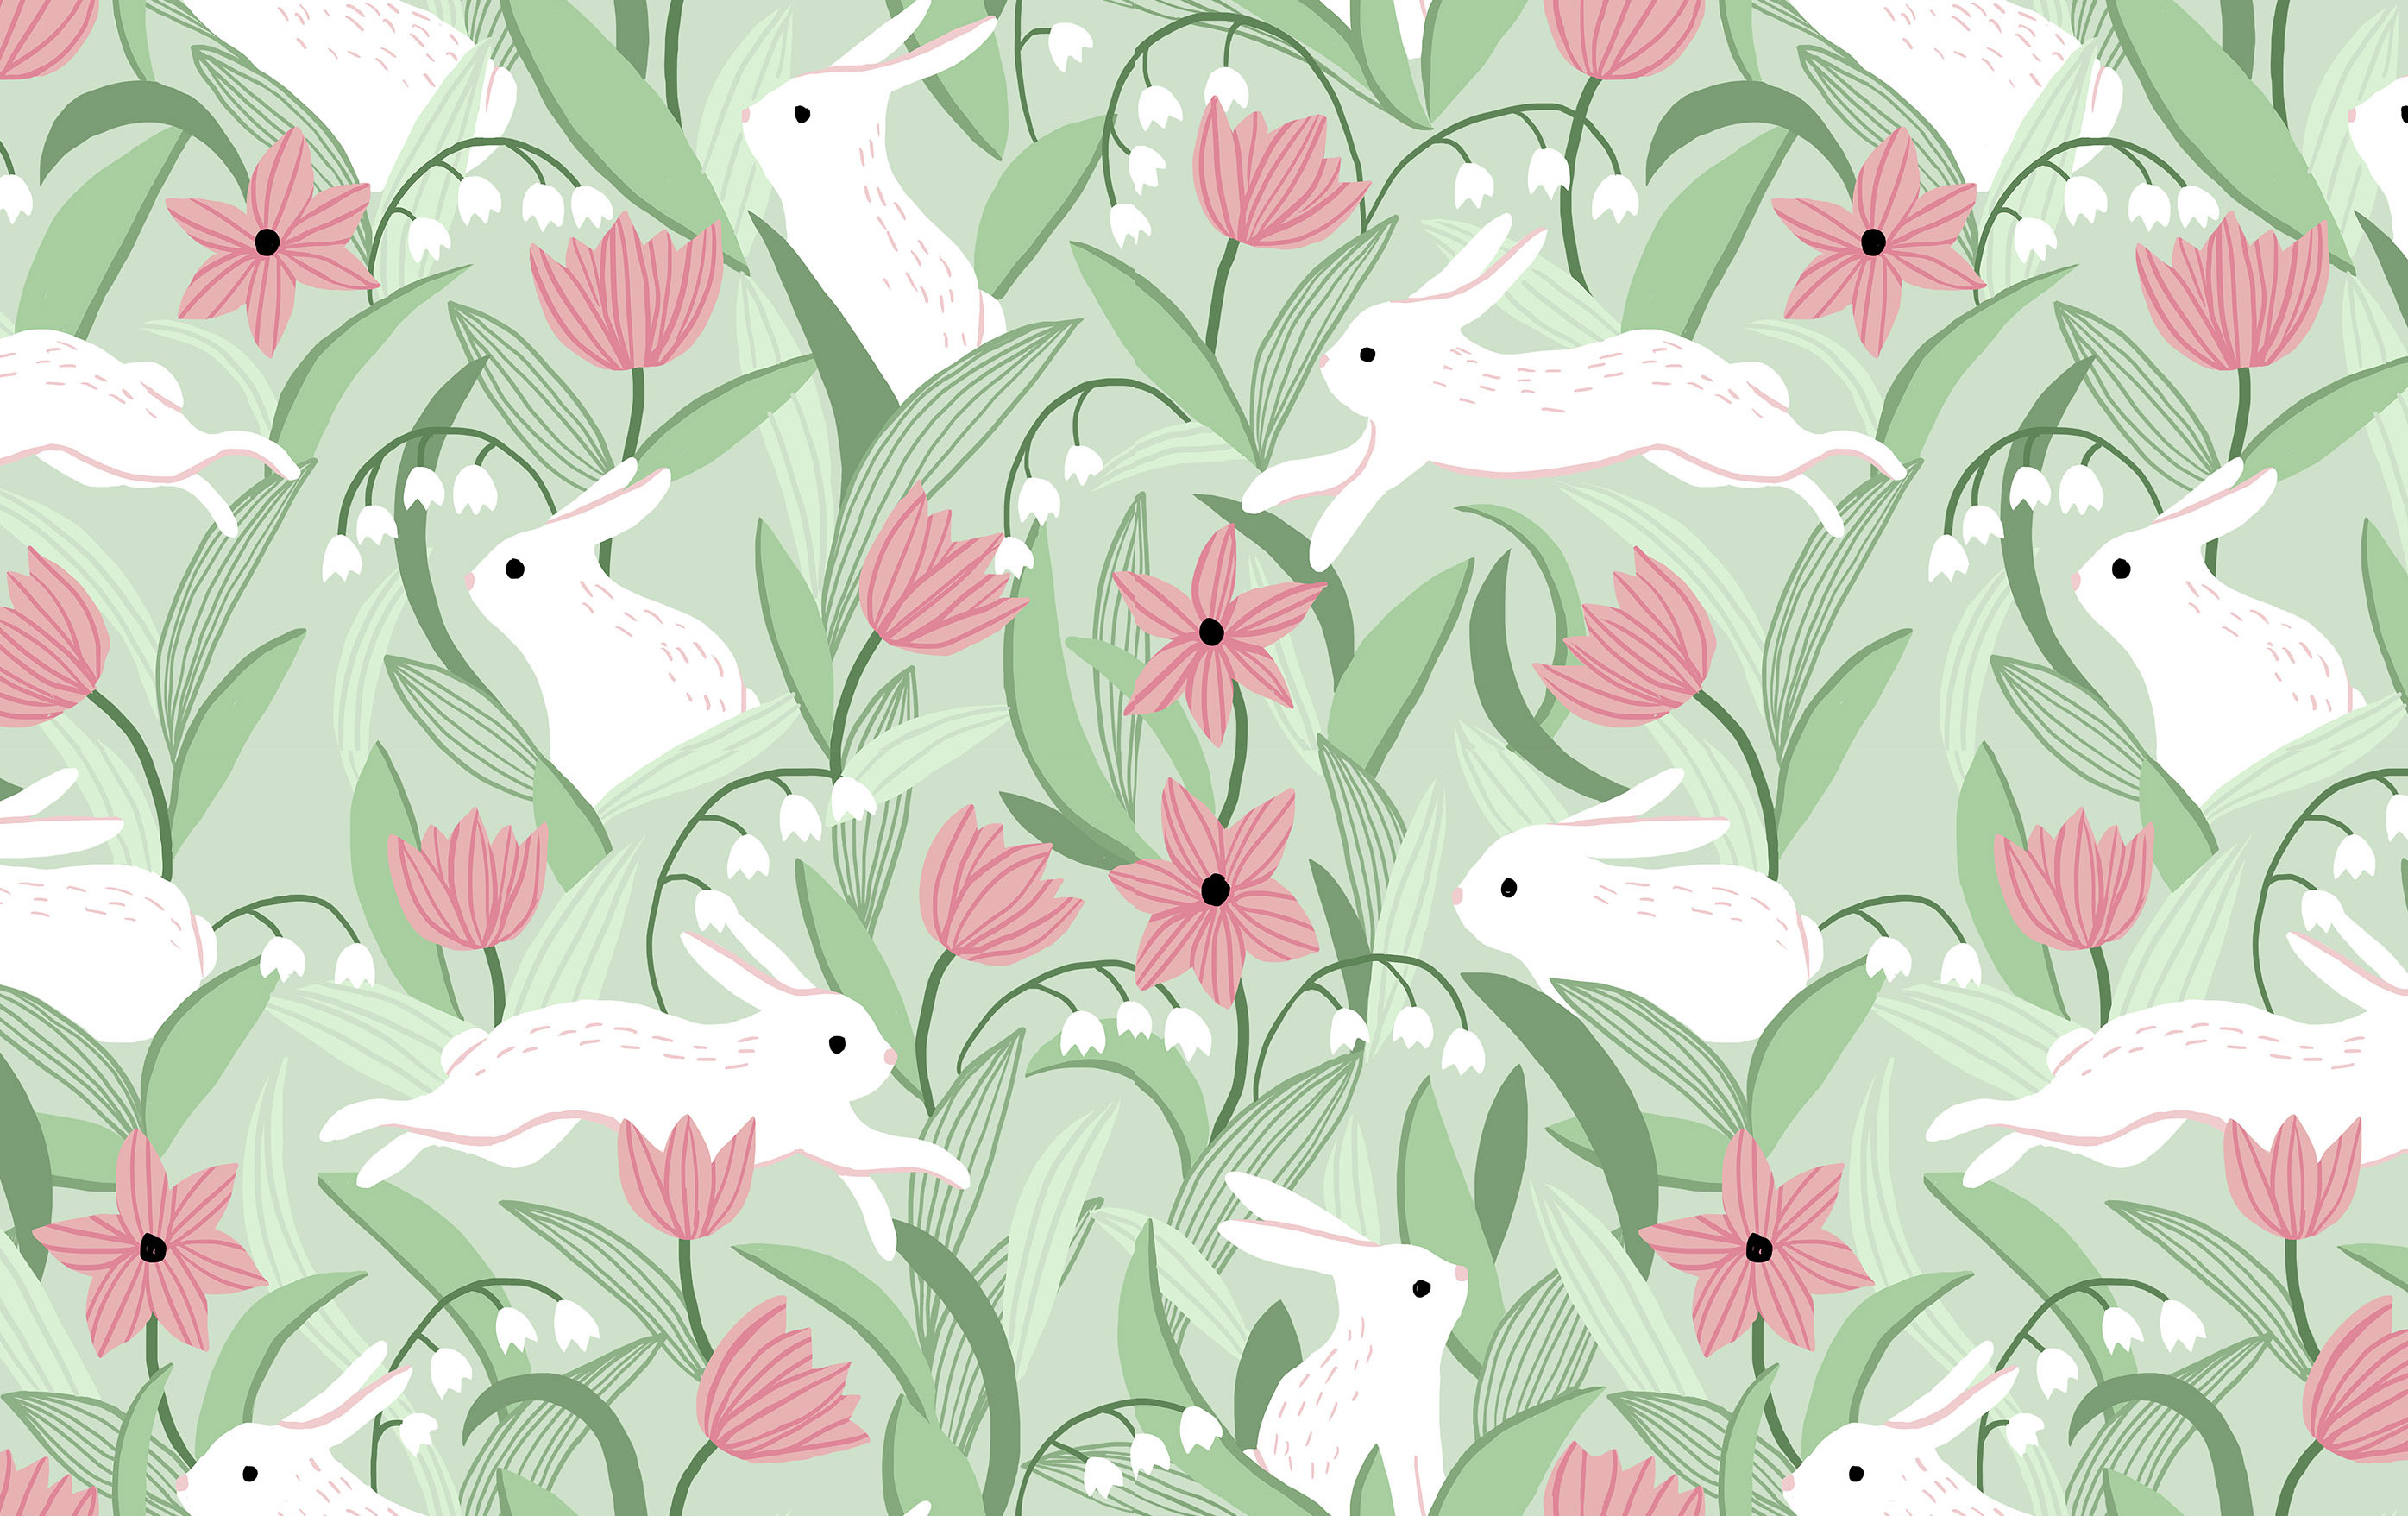 bunnies in a field of flowers